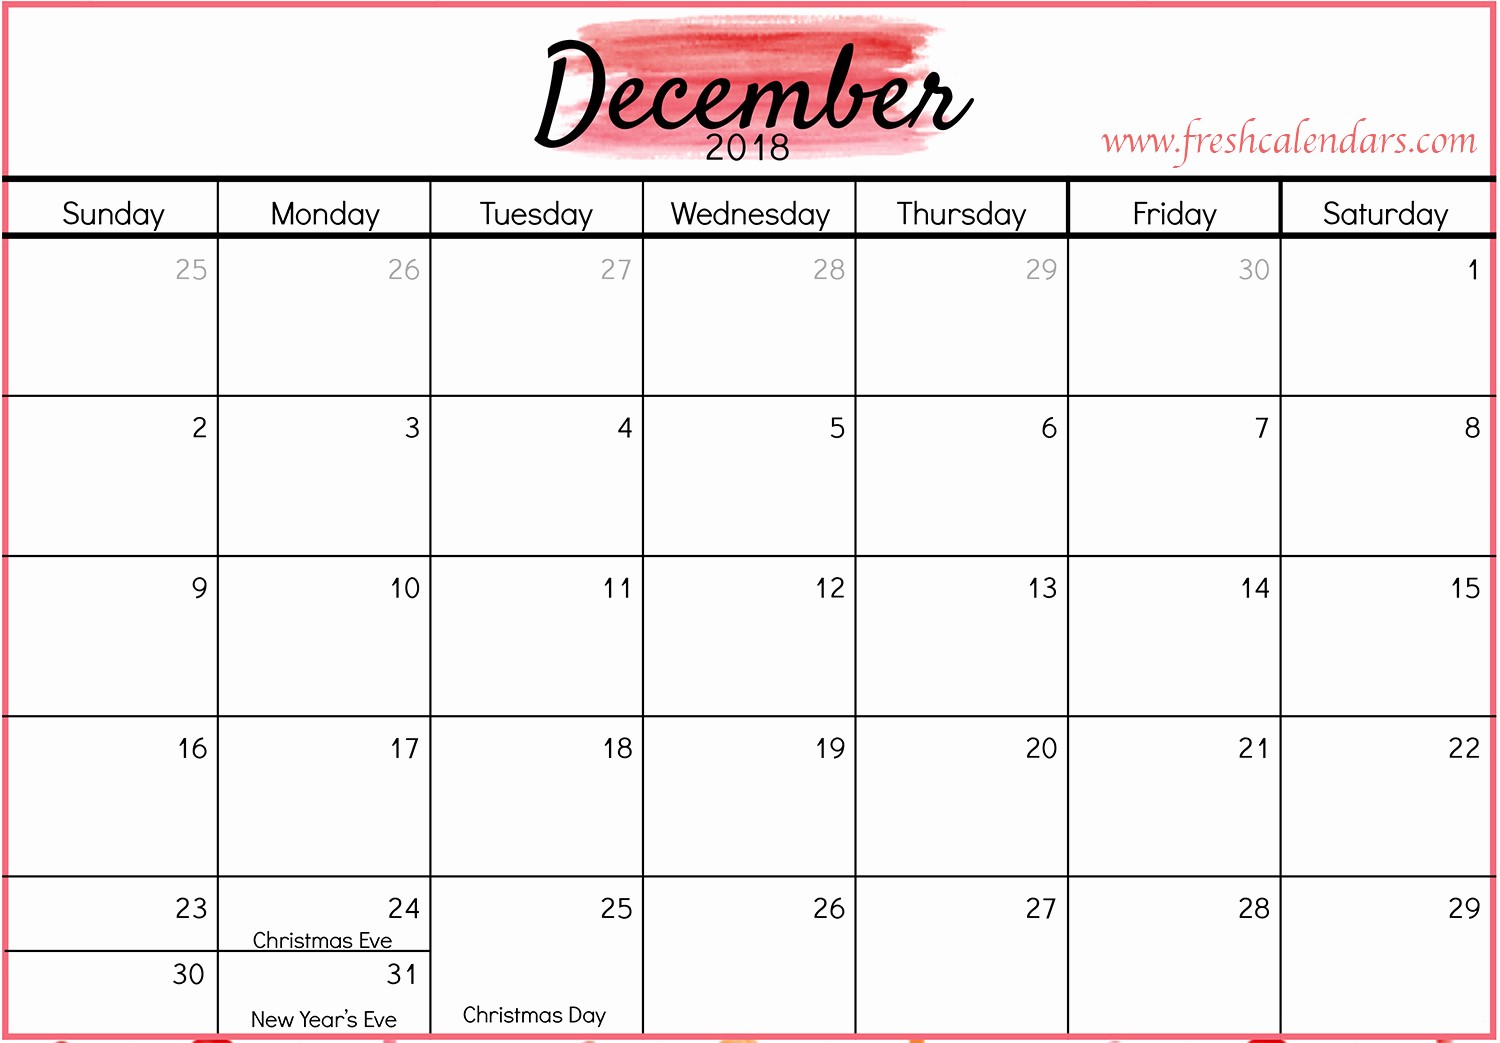 Blank Calendar Template December 2018 Best Of Blank December 2018 Calendar Printable Templates